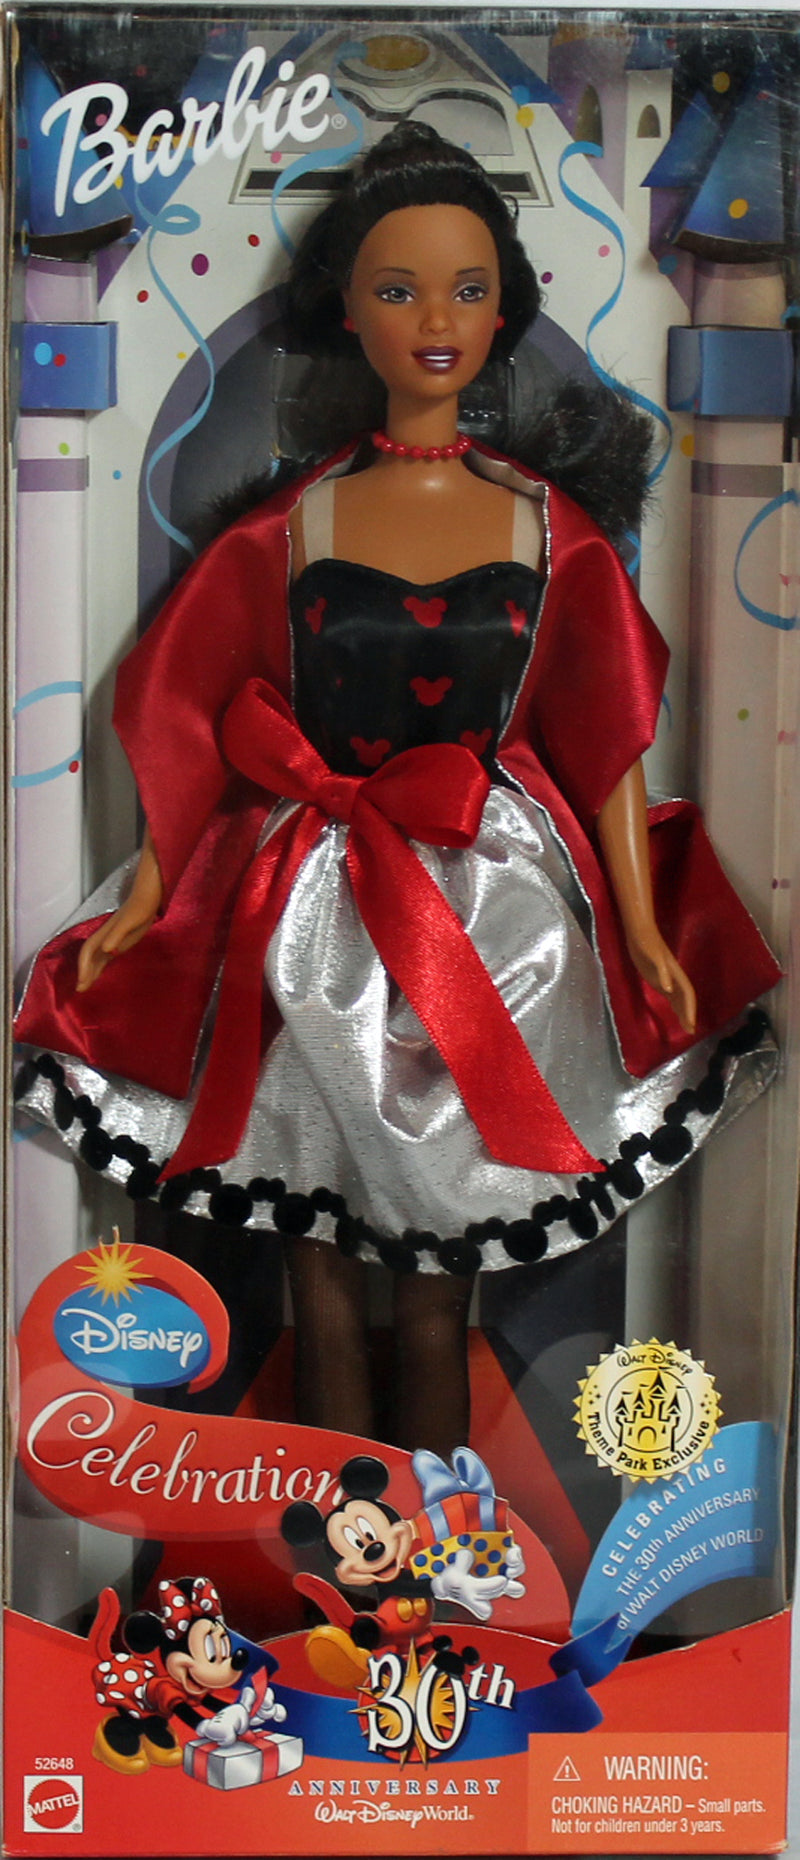 2001 Disney 30th Anniversary Celebration Barbie (52648) - African American